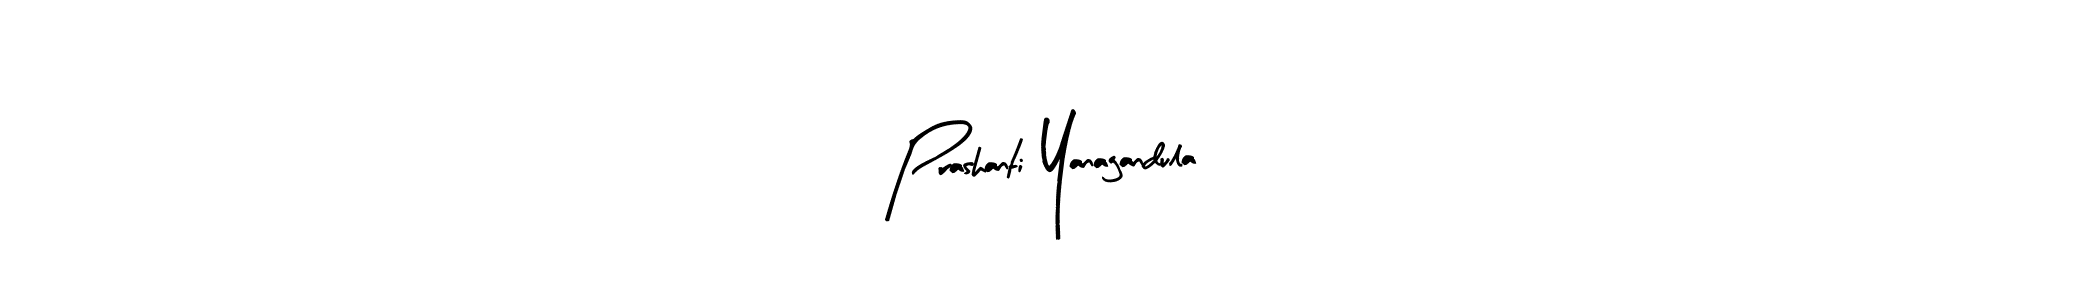 How to Draw Prashanti Yanagandula signature style? Arty Signature is a latest design signature styles for name Prashanti Yanagandula. Prashanti Yanagandula signature style 8 images and pictures png